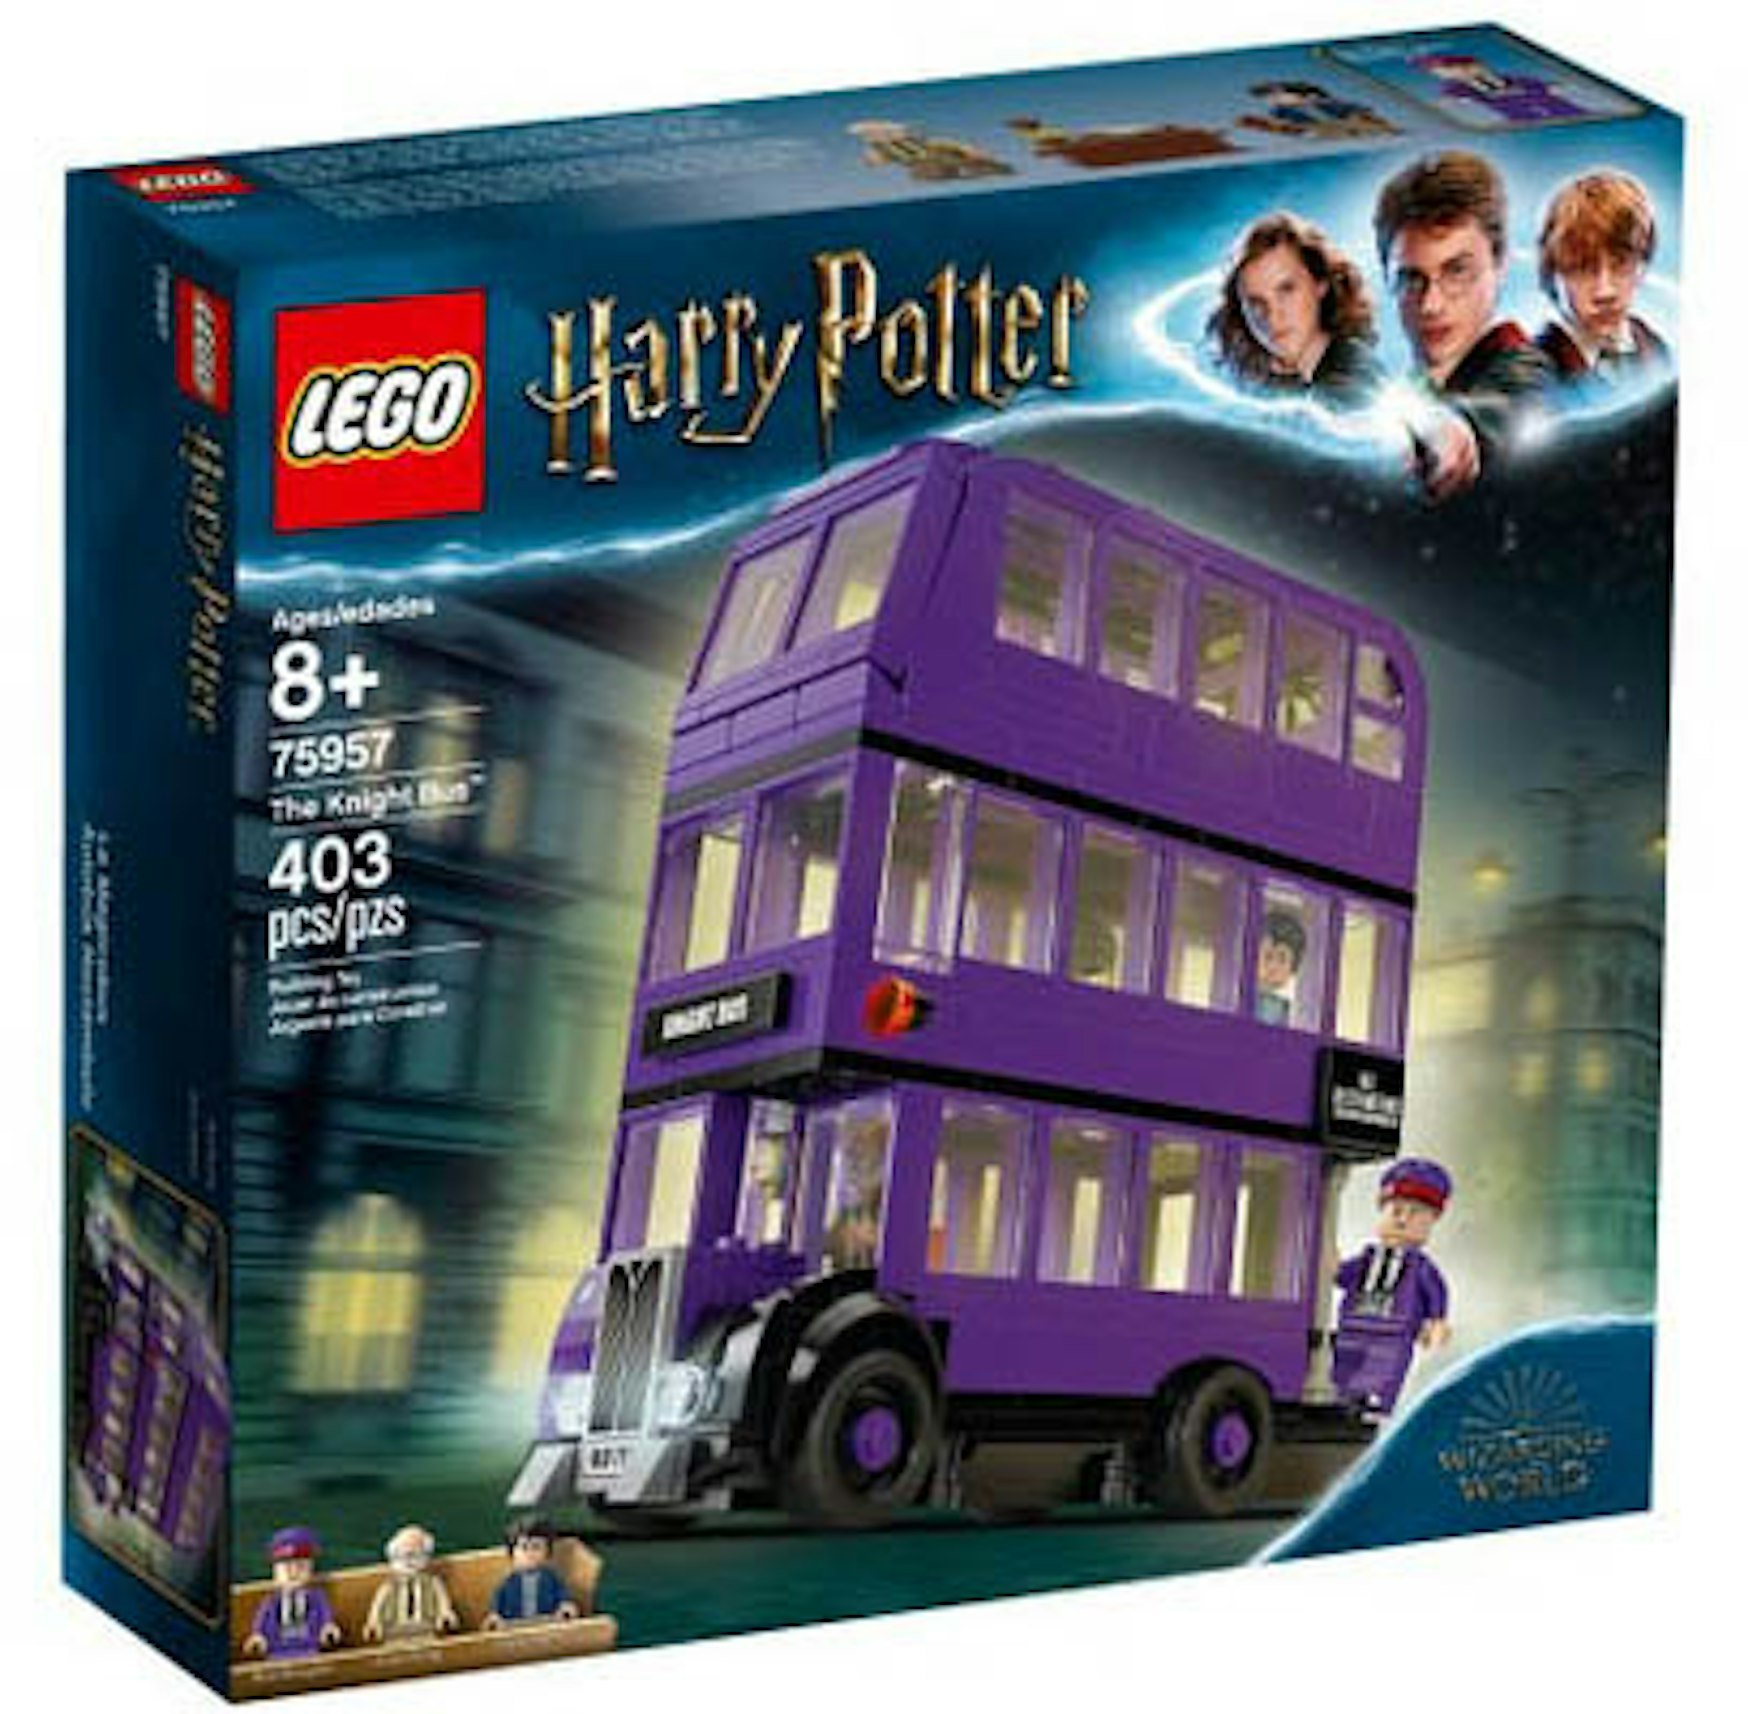 LEGO Potter The Knight Bus Set 75957 - JP